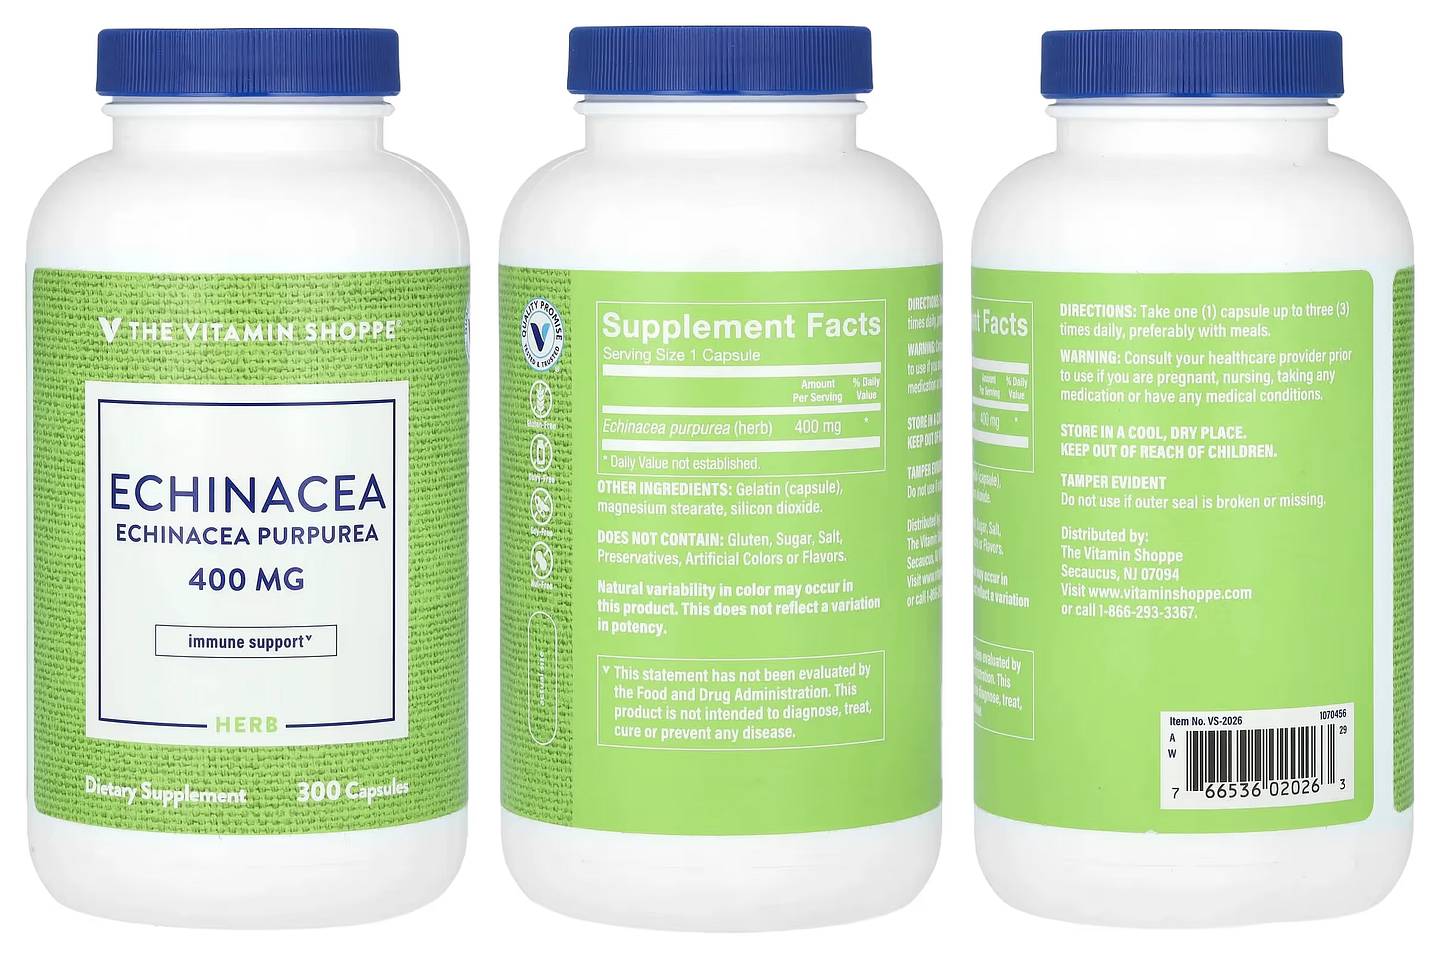 The Vitamin Shoppe, Echinacea packaging